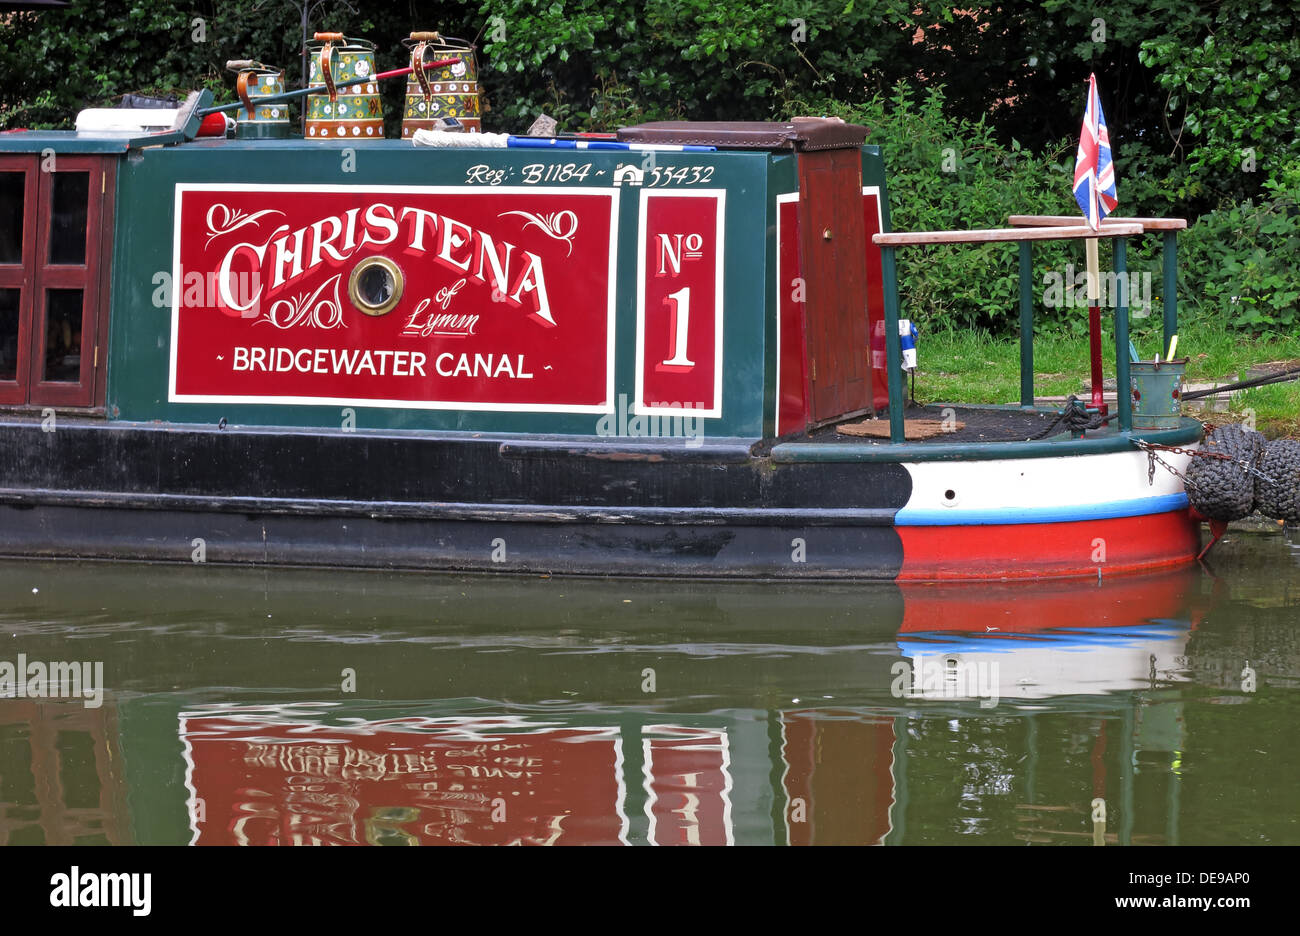 Bridgewater Canal Barge, Christena No. 1, in Red & Green, in Grappenhall, Warrington, Cheshire, England, UK, WA4 Stockfoto